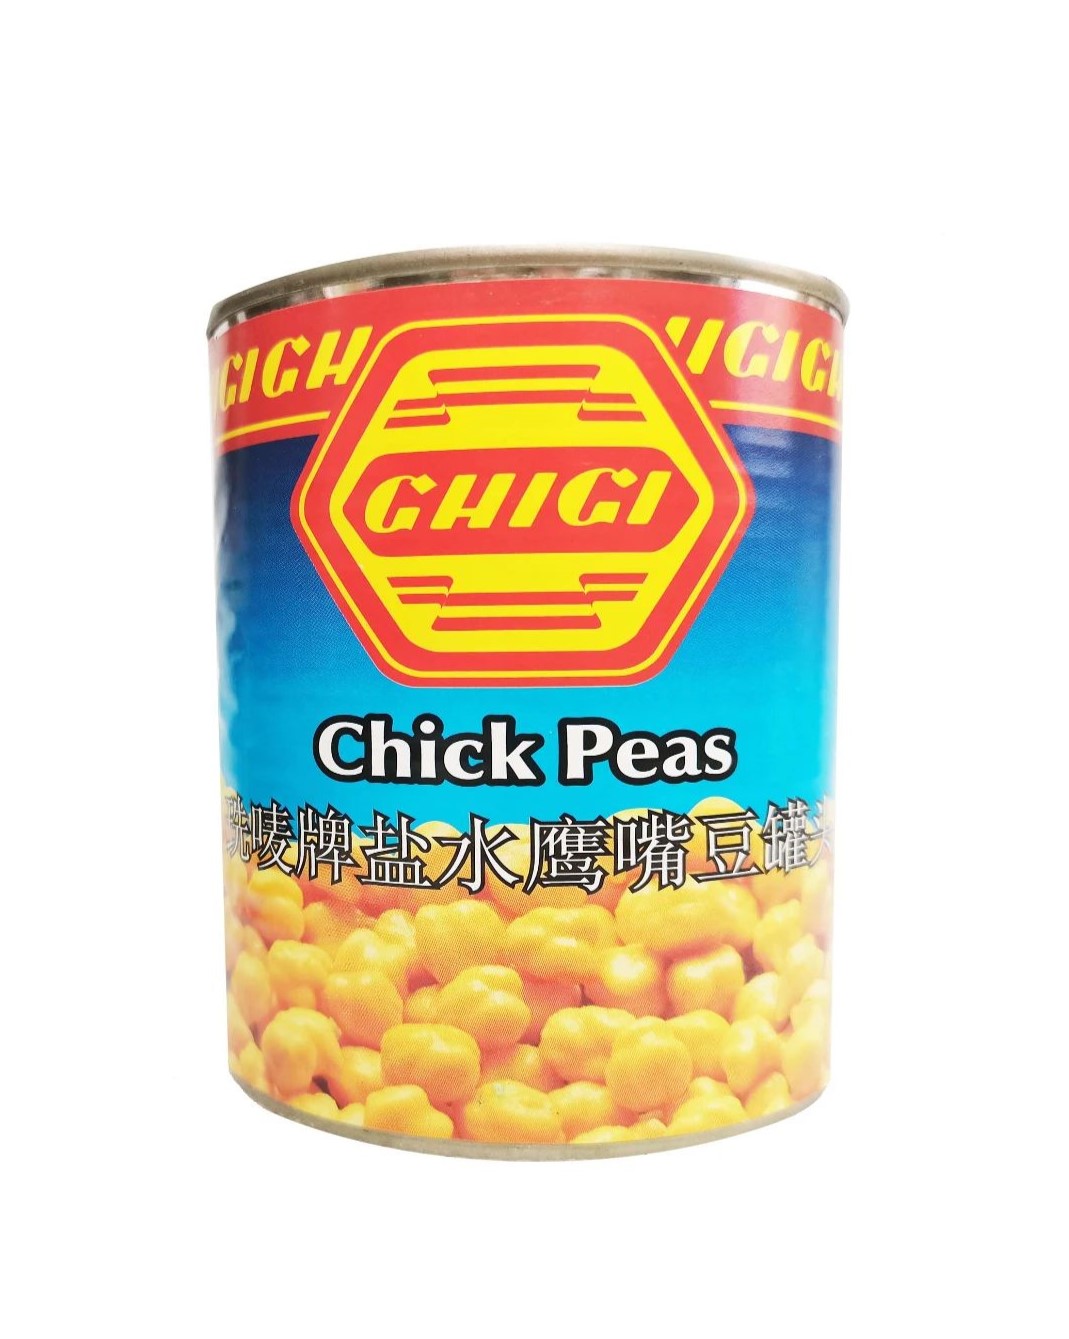 GHIGI Chick Peas 